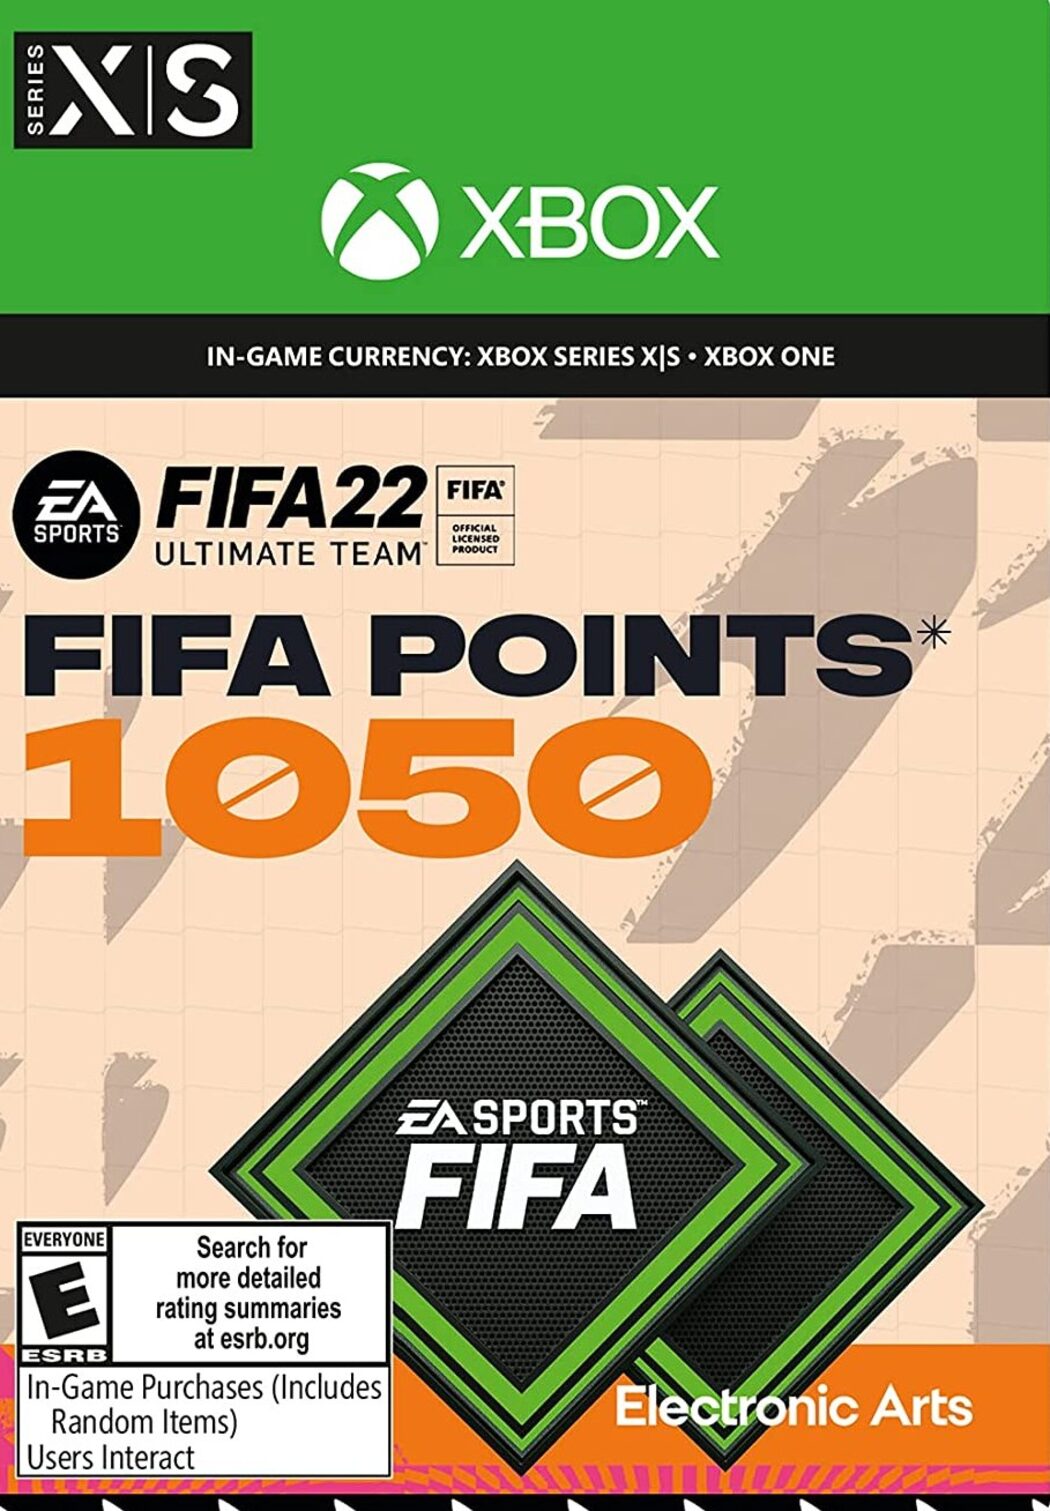 Buy EA SPORTS™ FUT 23 – FIFA Points 5900